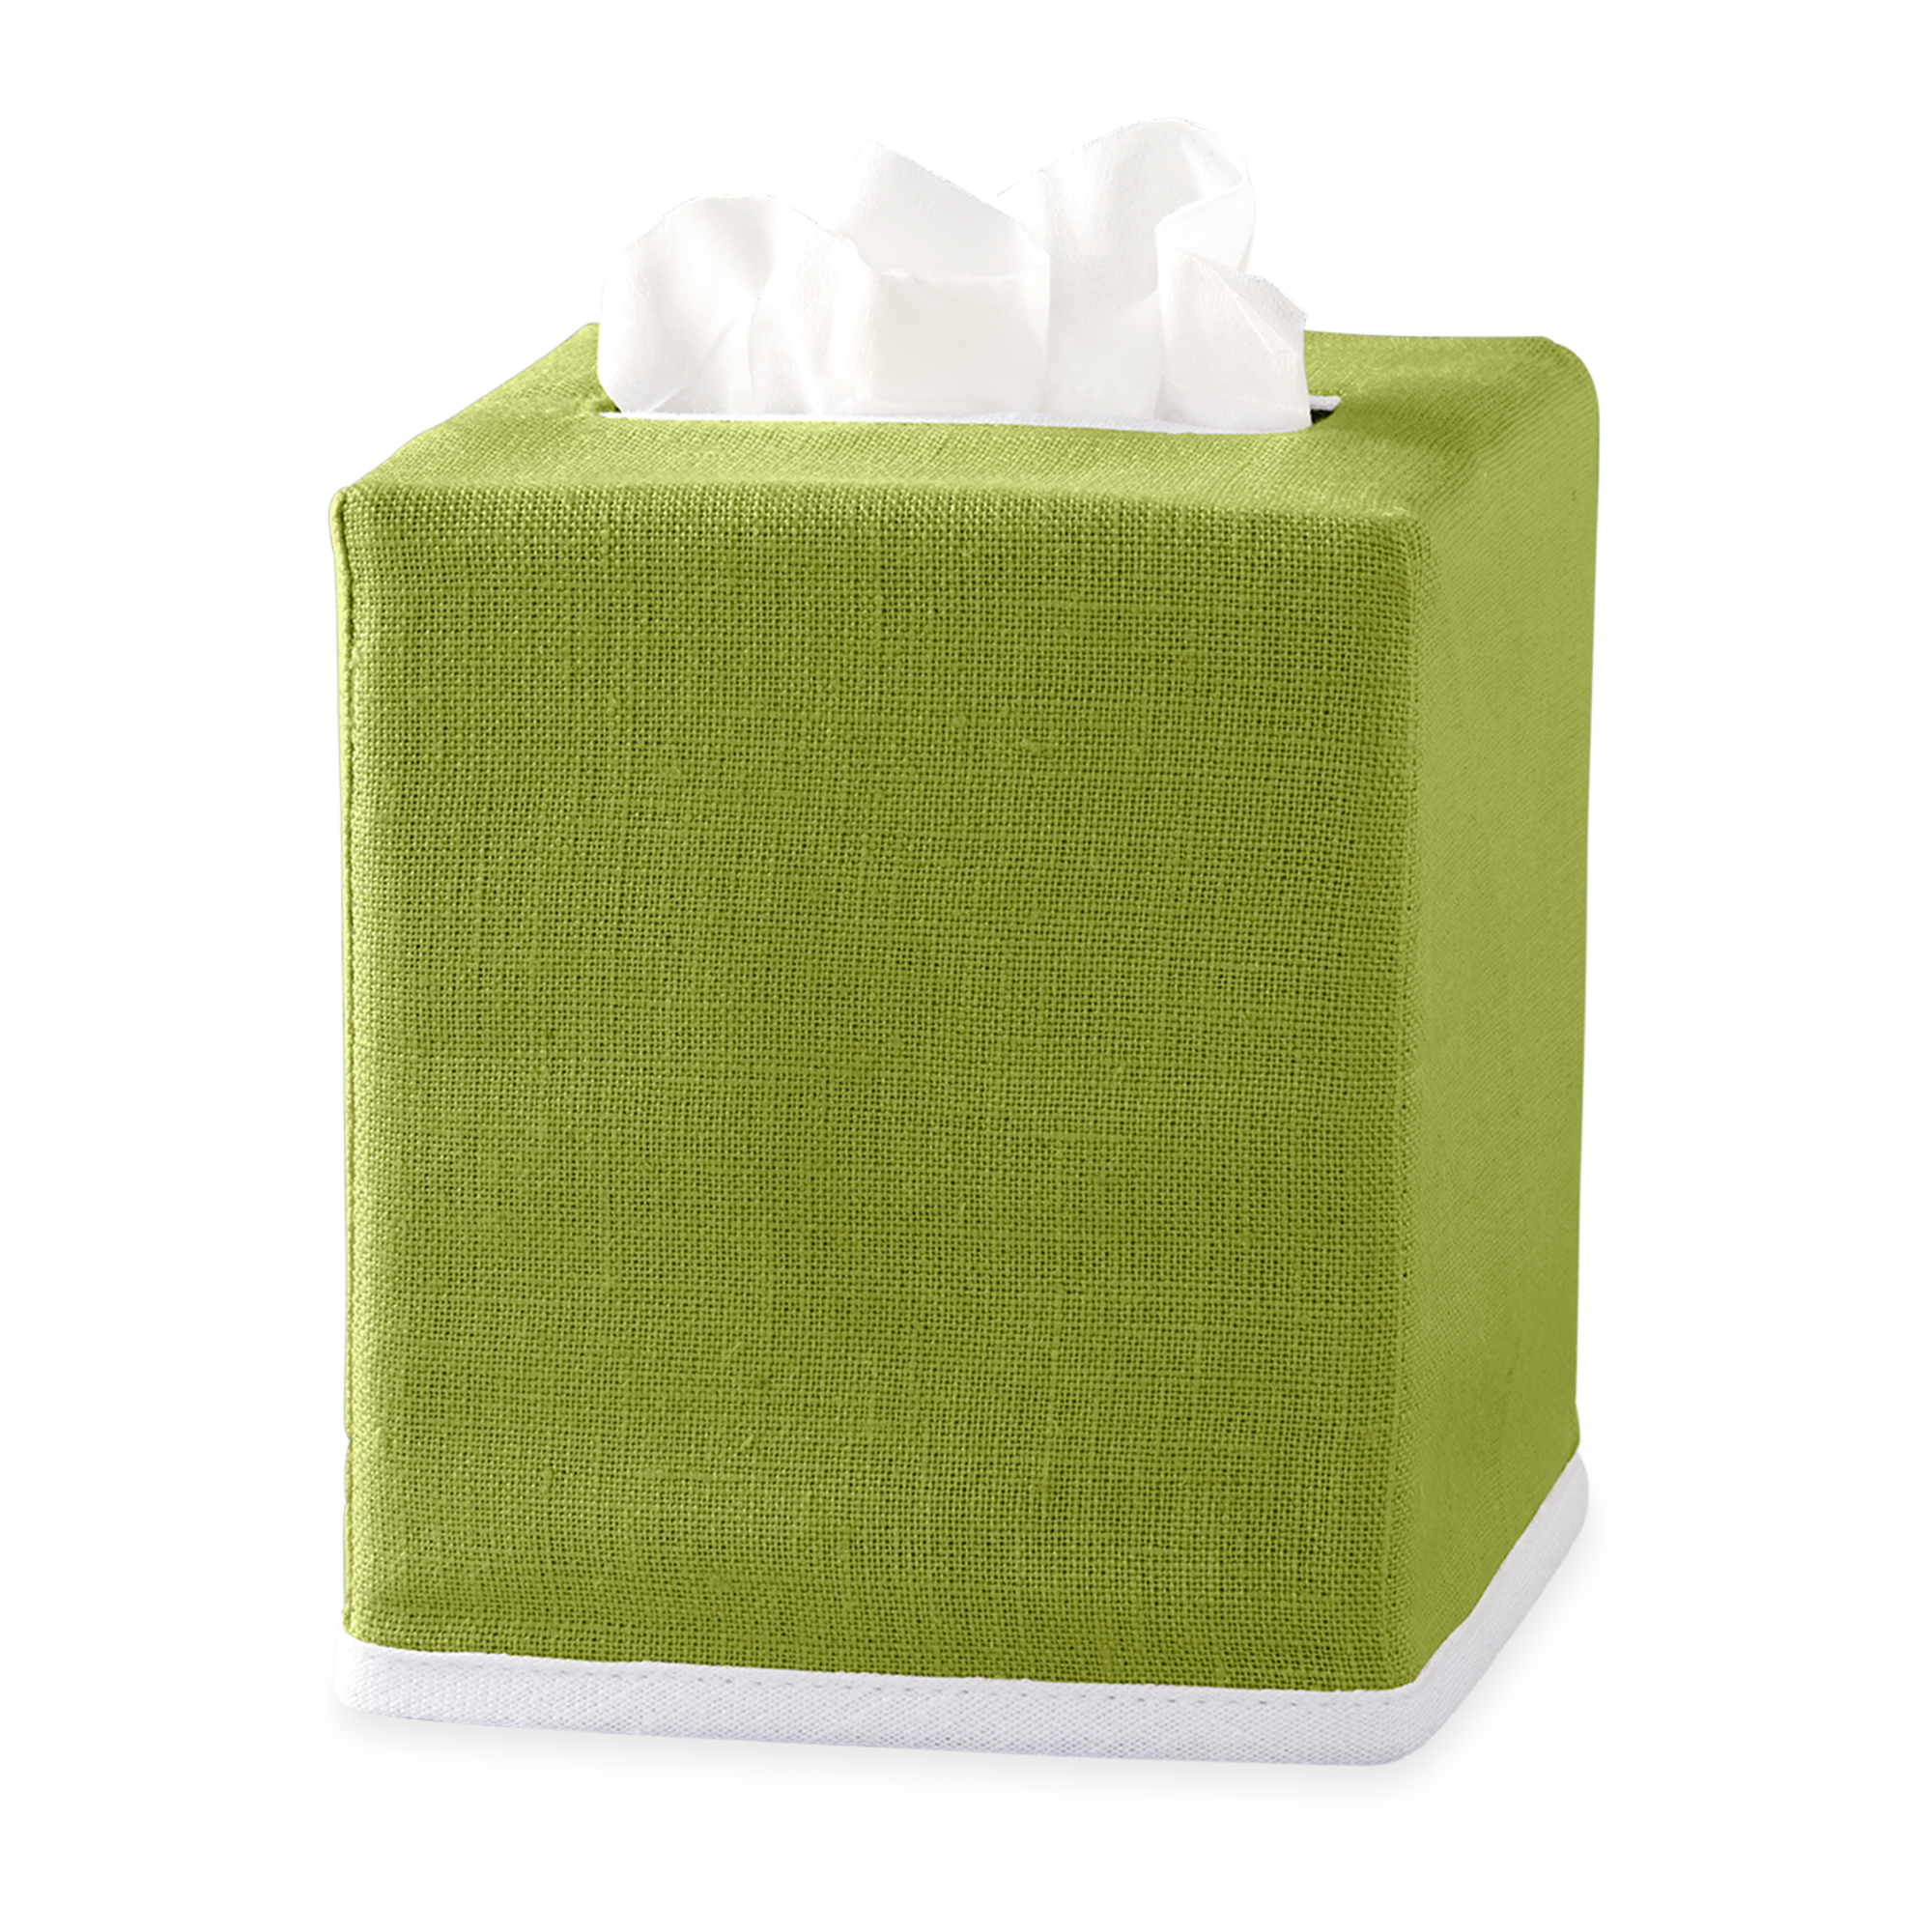 Grass Matouk Chelsea Linen Tissue Box Cover Against White Background